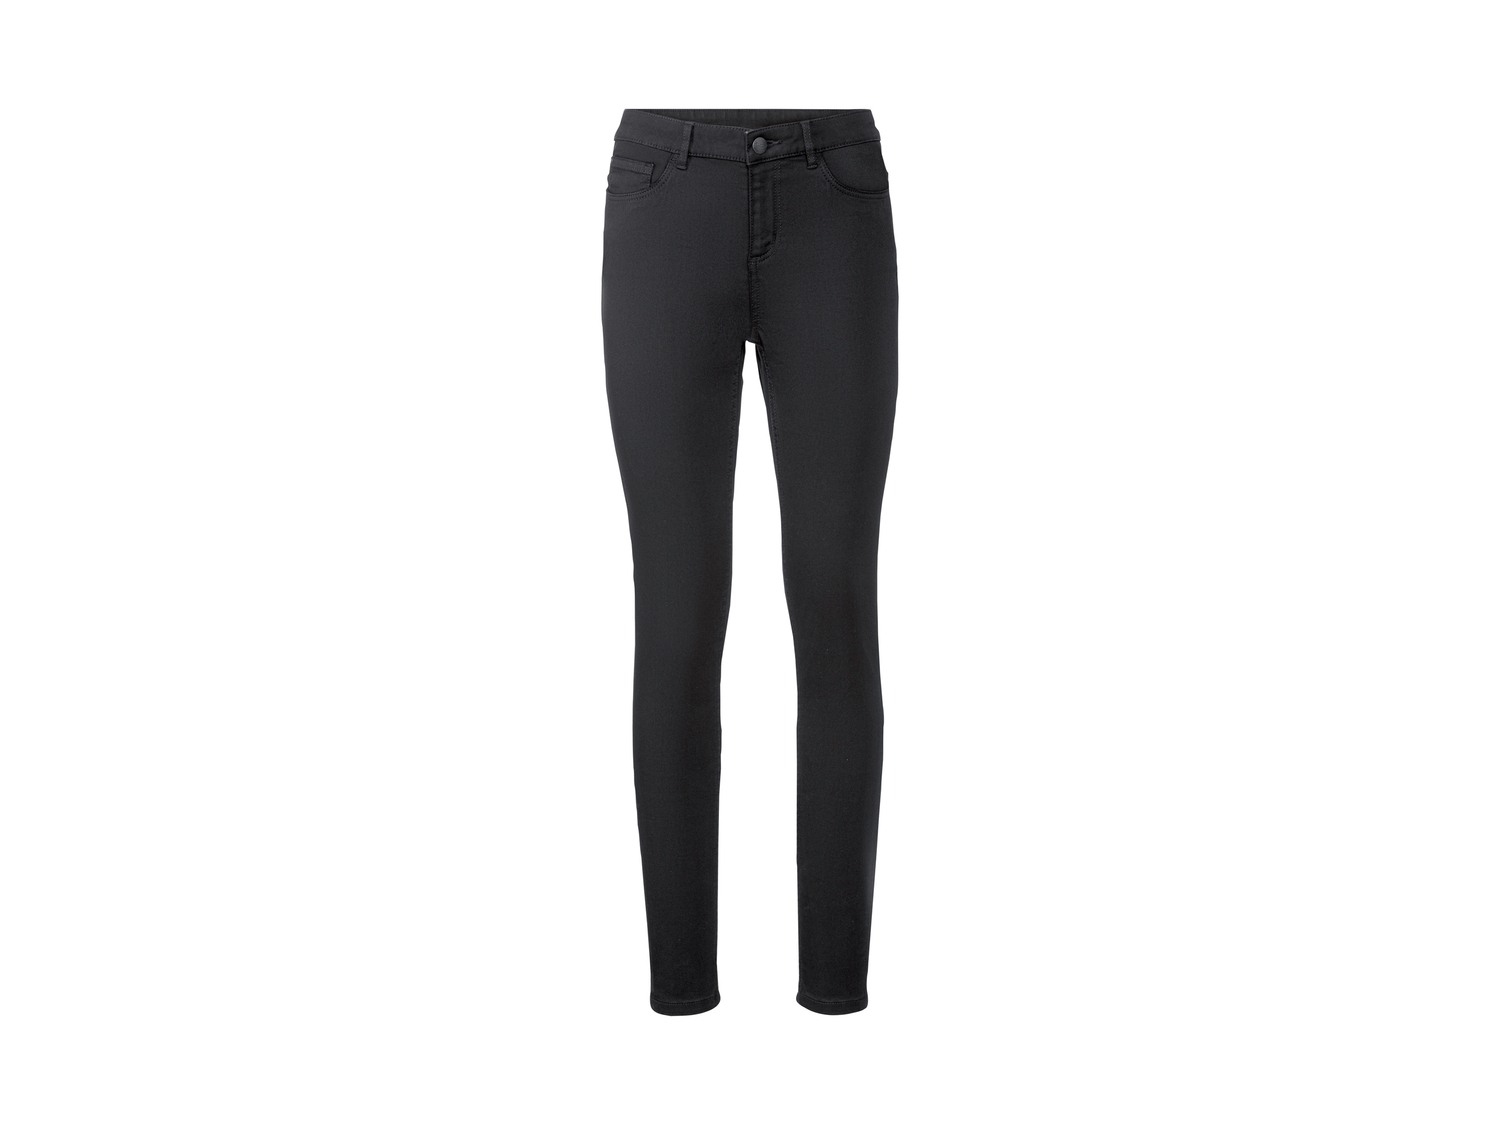 Jeans da donna Super Skinny Fit Esmara, prezzo 11.99 &#8364; 
Misure: 38-48
Taglie ...